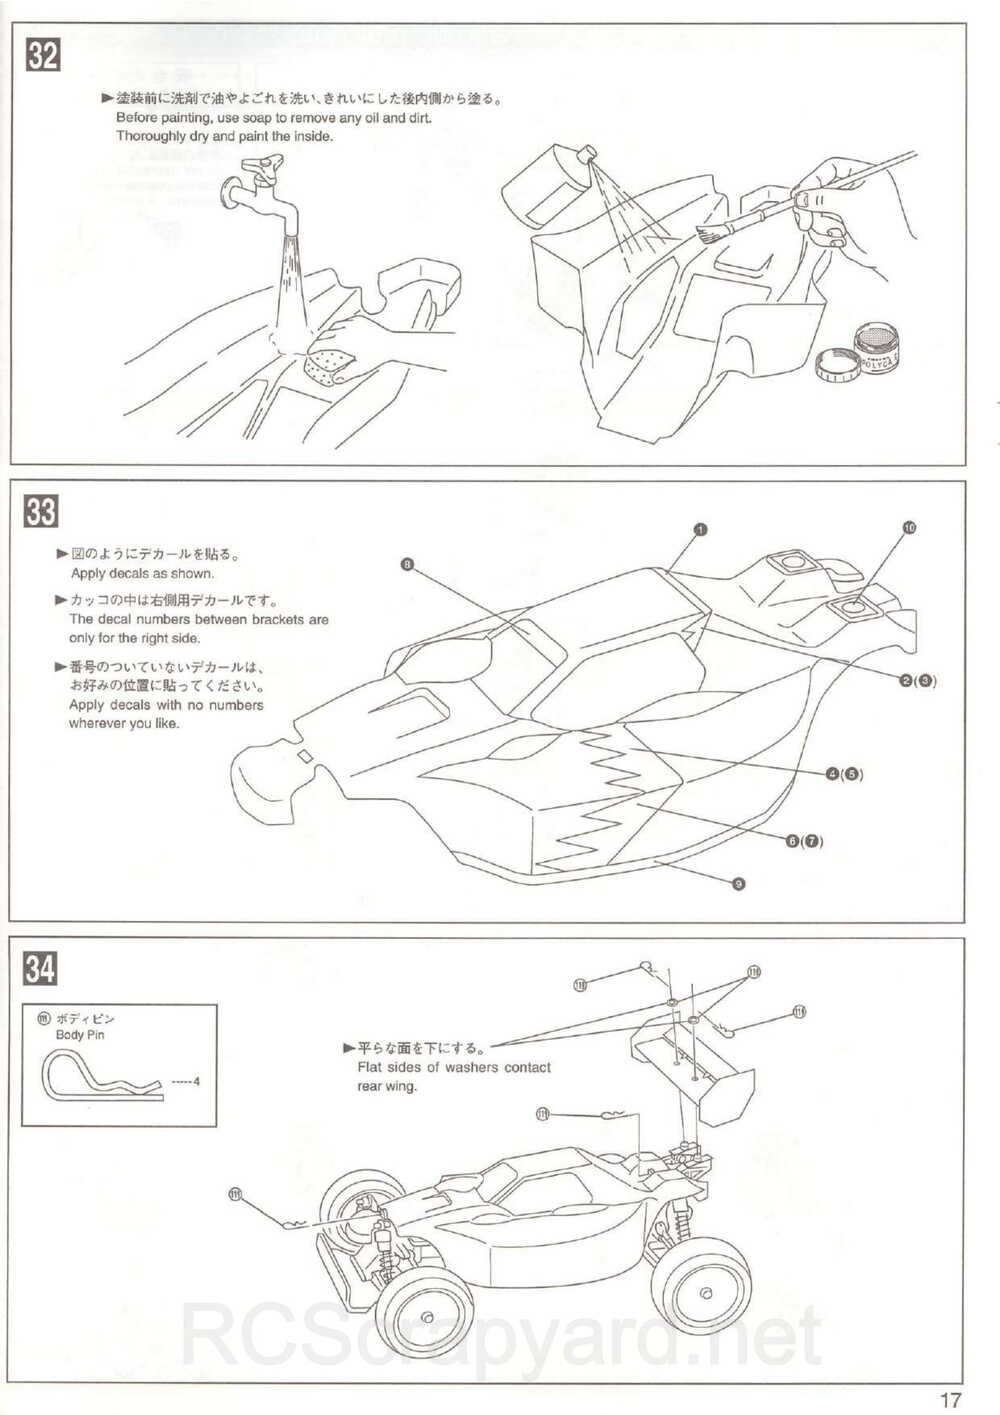 Kyosho - 31345 - Inferno 10 - Manual - Page 17